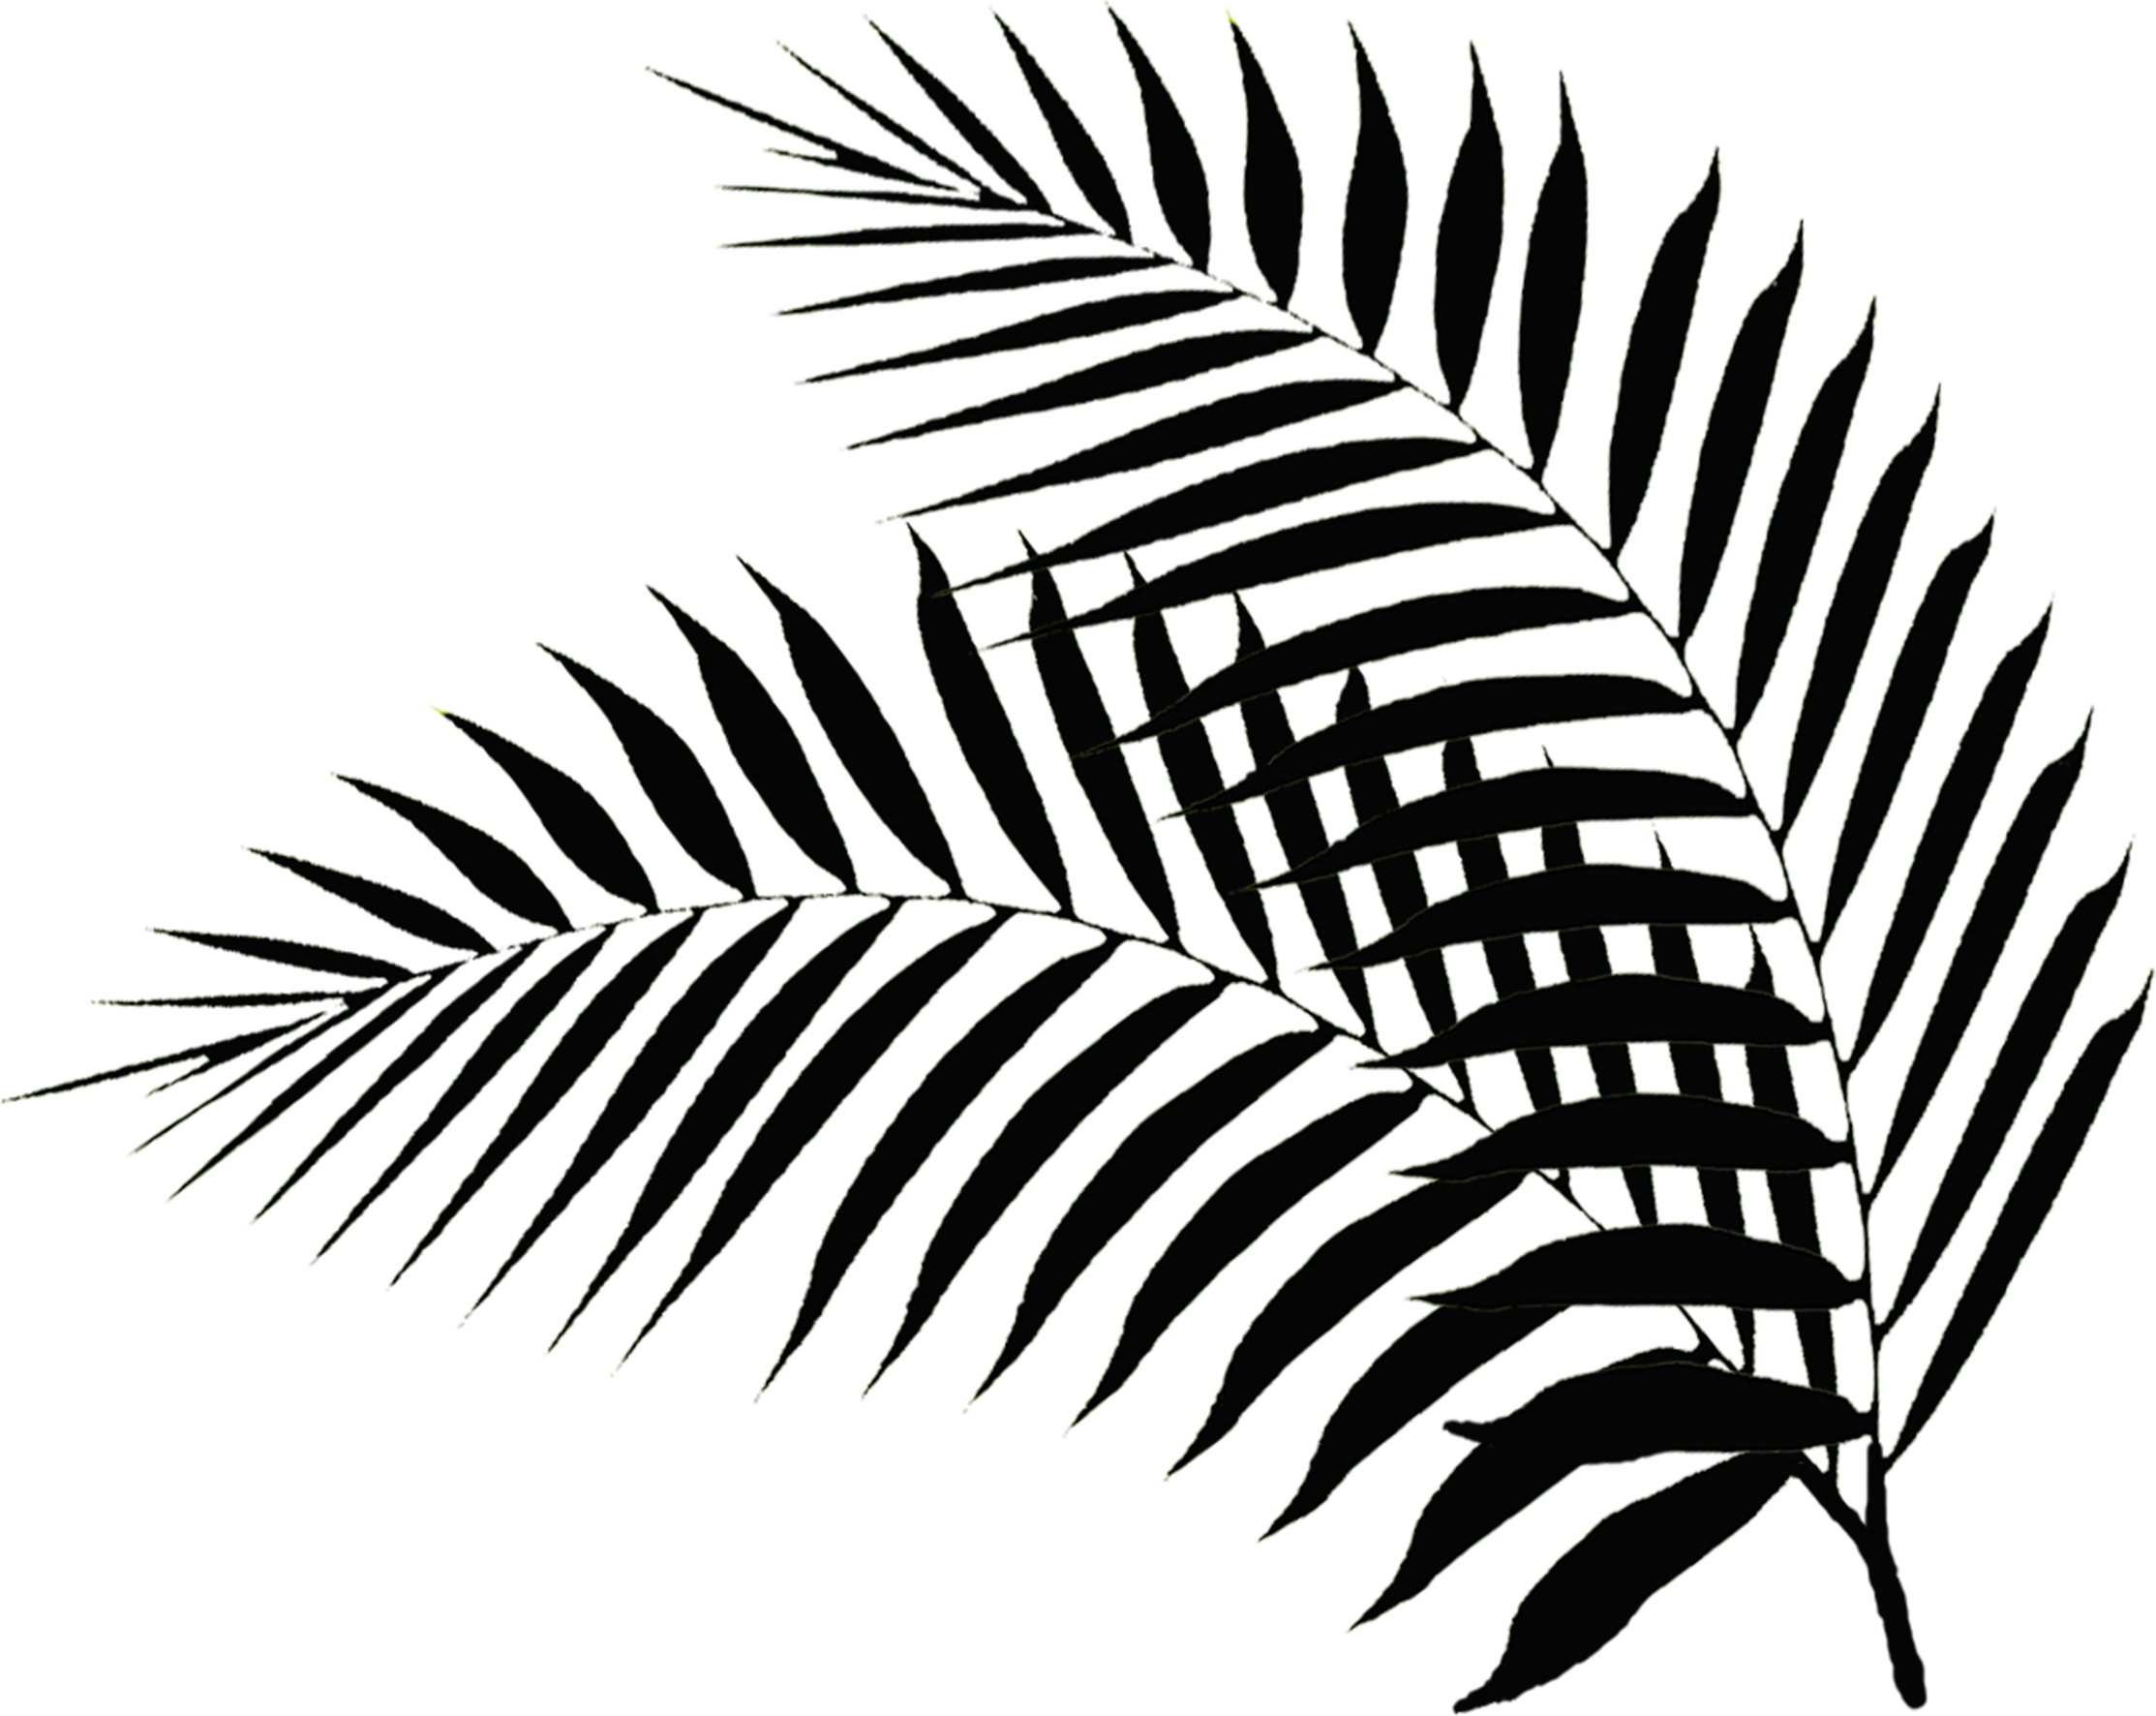 Palm Leaf Drawing at GetDrawings | Free download